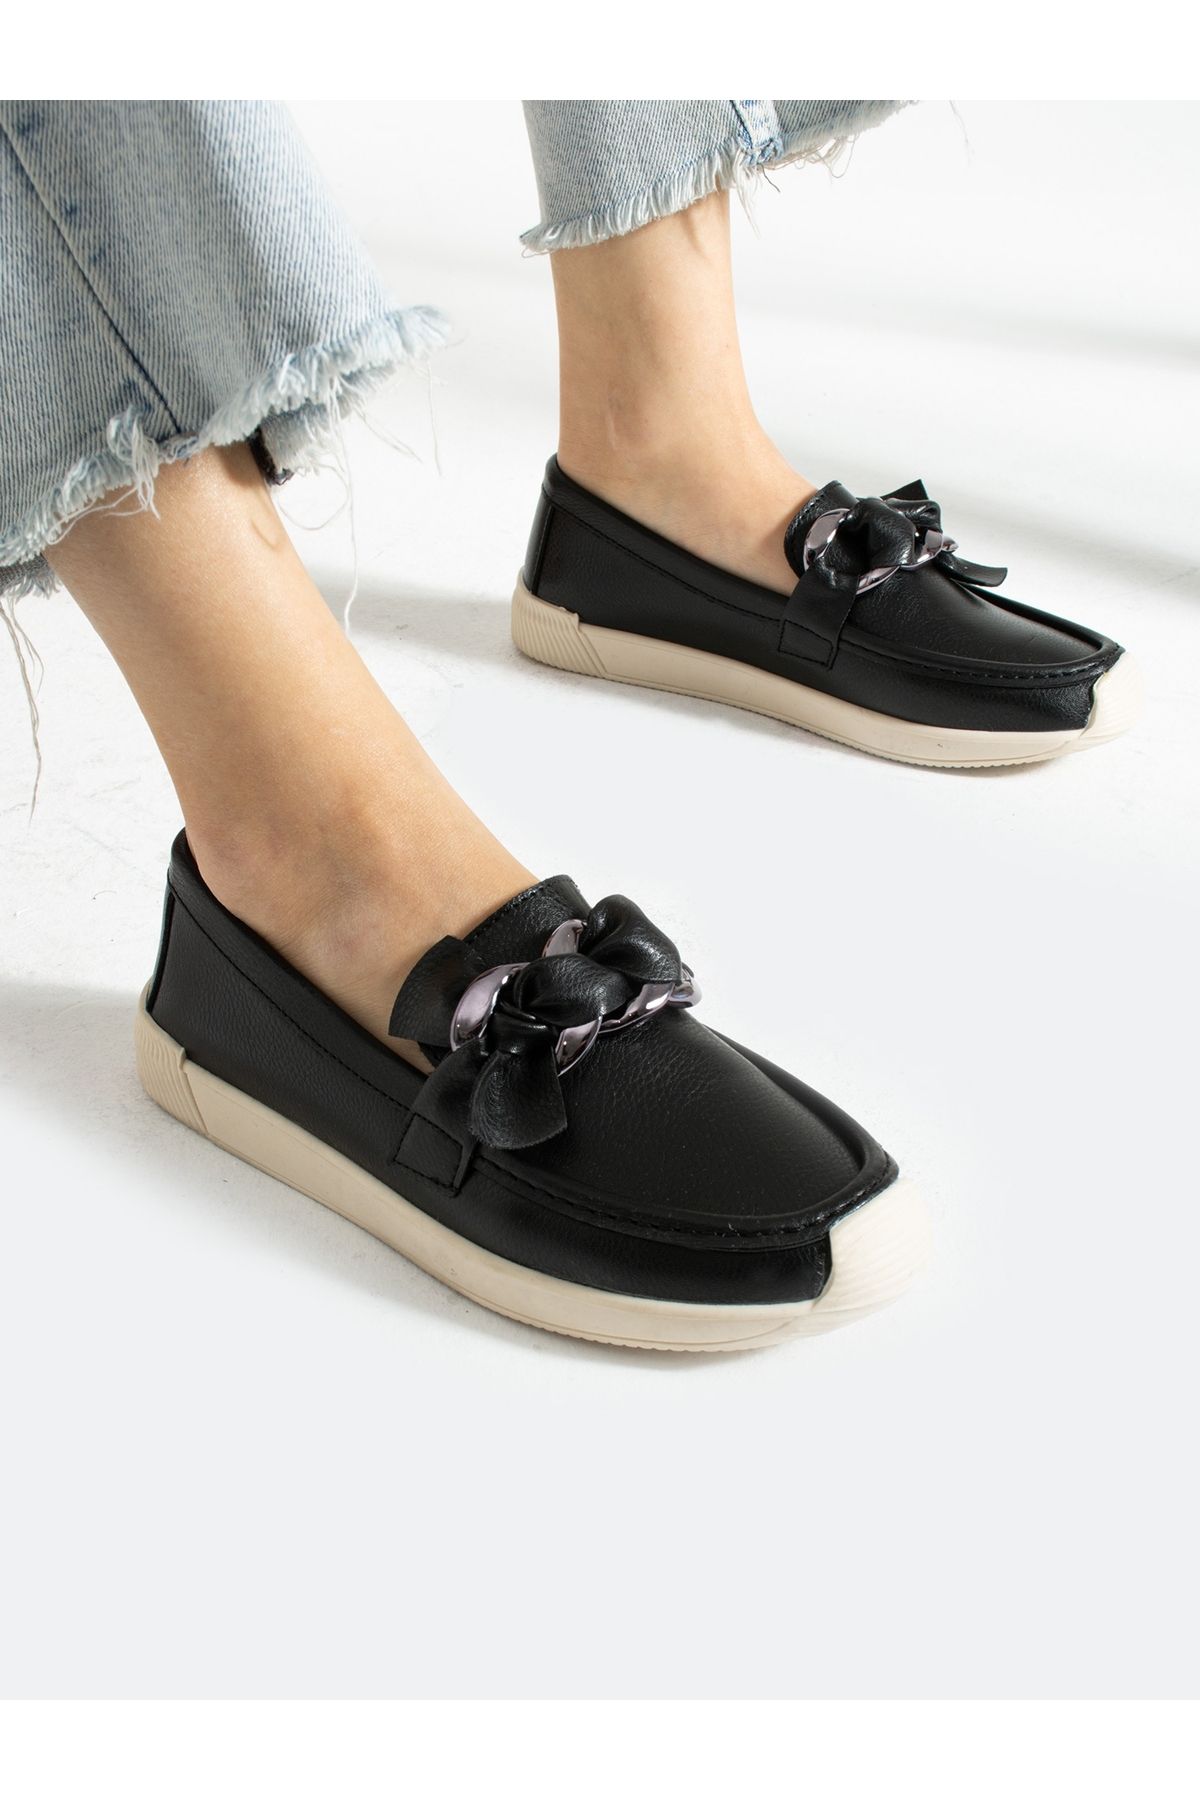 Alemdar Shoes Siyah Toka Detay Kadın Loafer